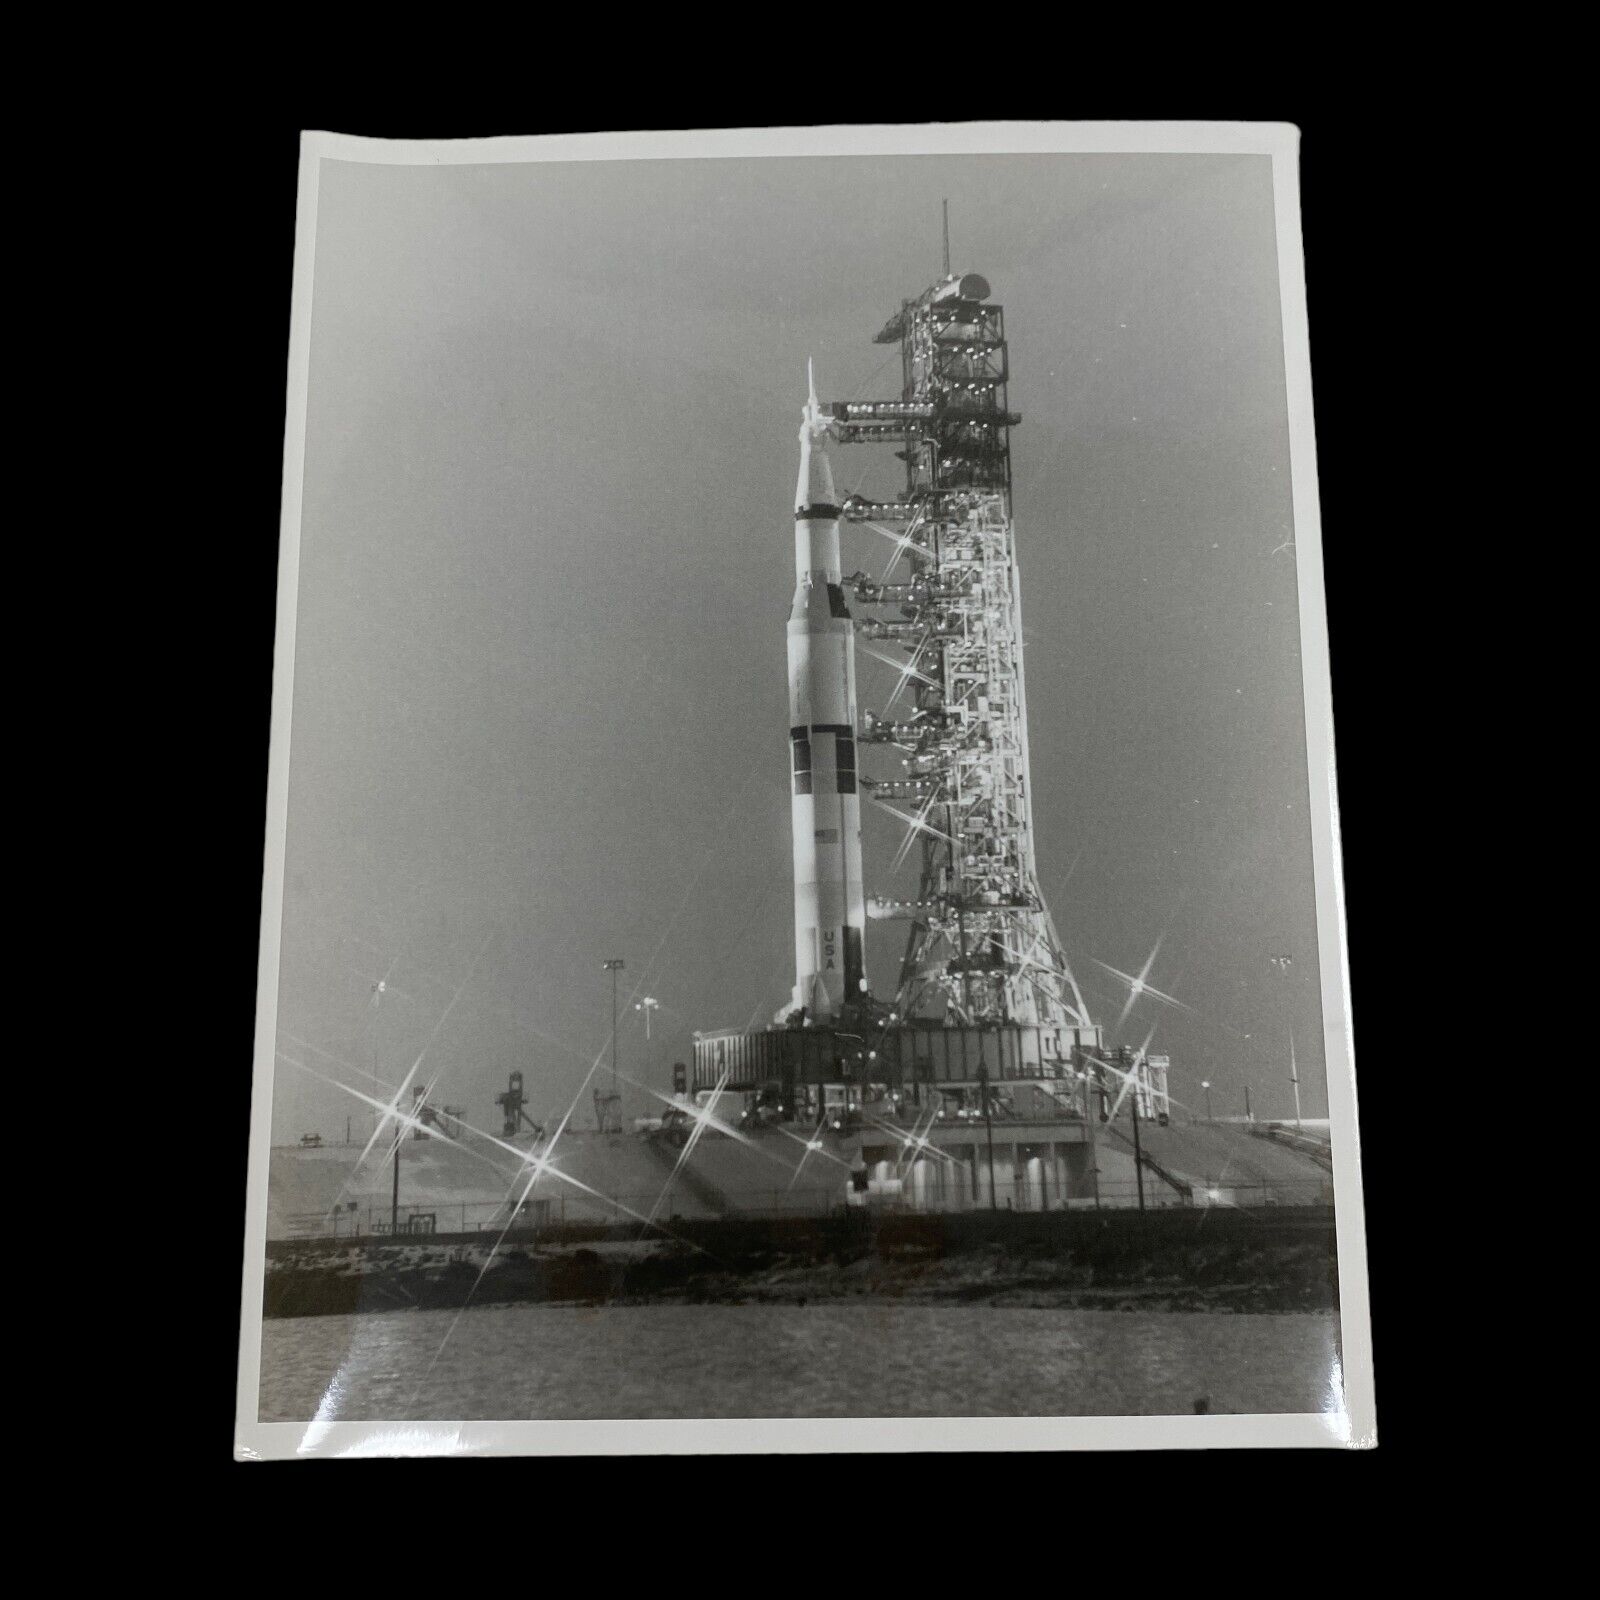 RARE Original 1972 Apollo 16 NASA Type 1 Apollo Saturn V Rocket Launch Photo